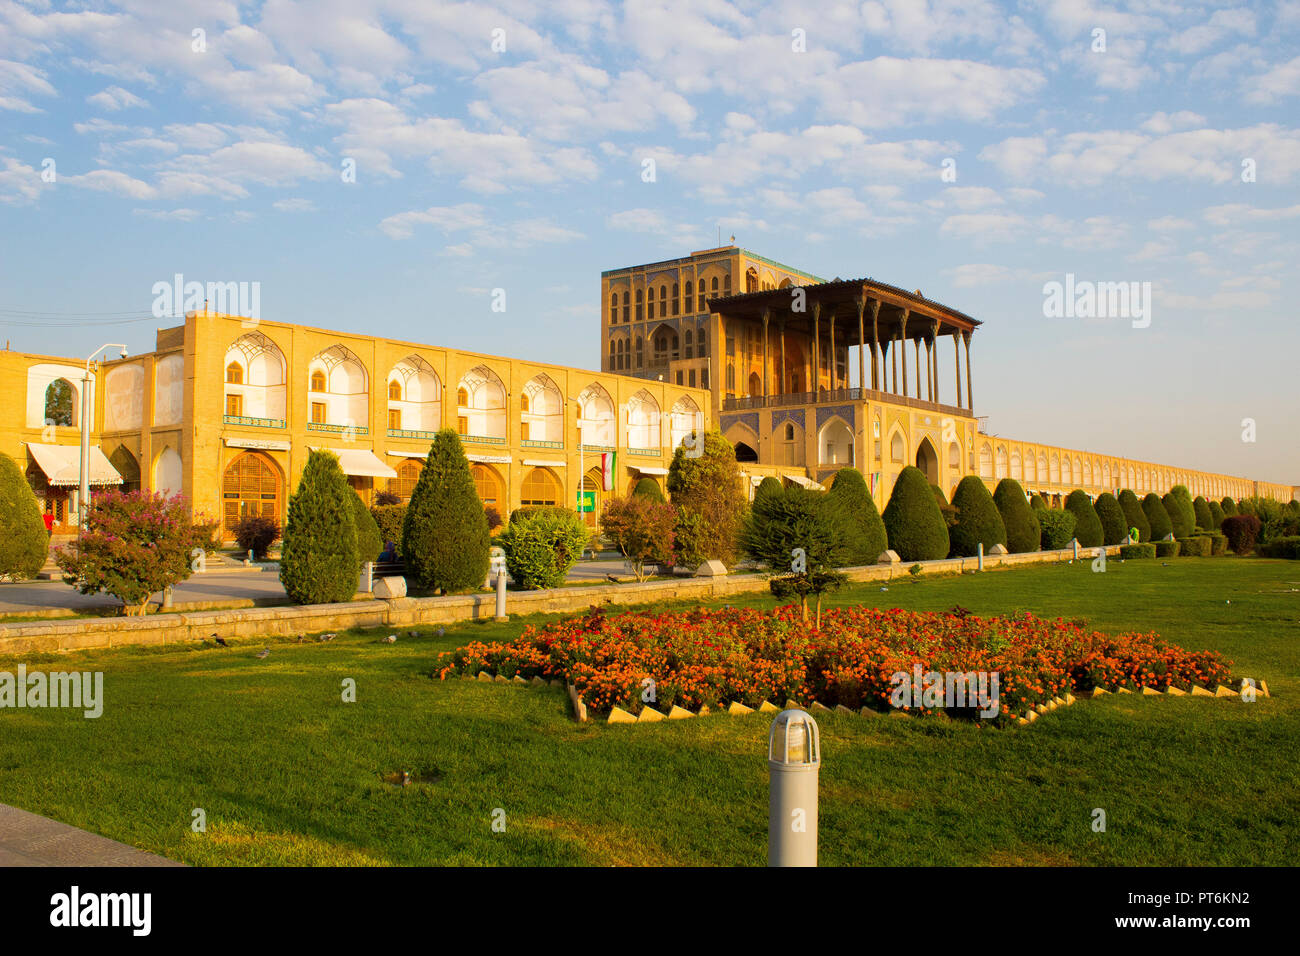 Un luogo storico in Iran è Naghshe Jahan piazza. Foto Stock